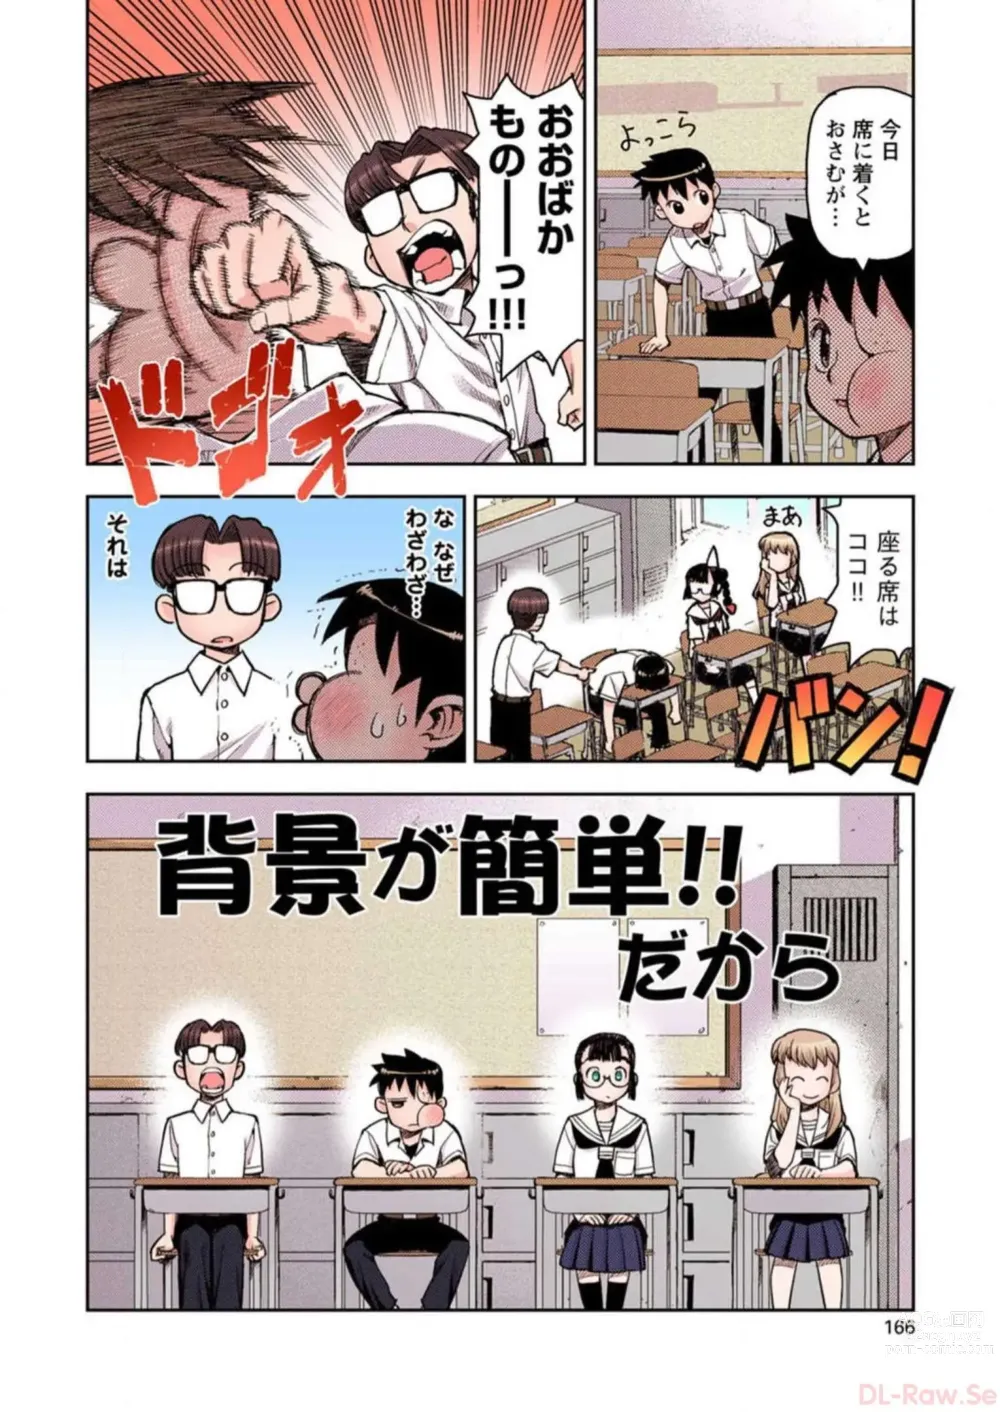 Page 168 of manga Tsugumomo Digital Colored Comics V1